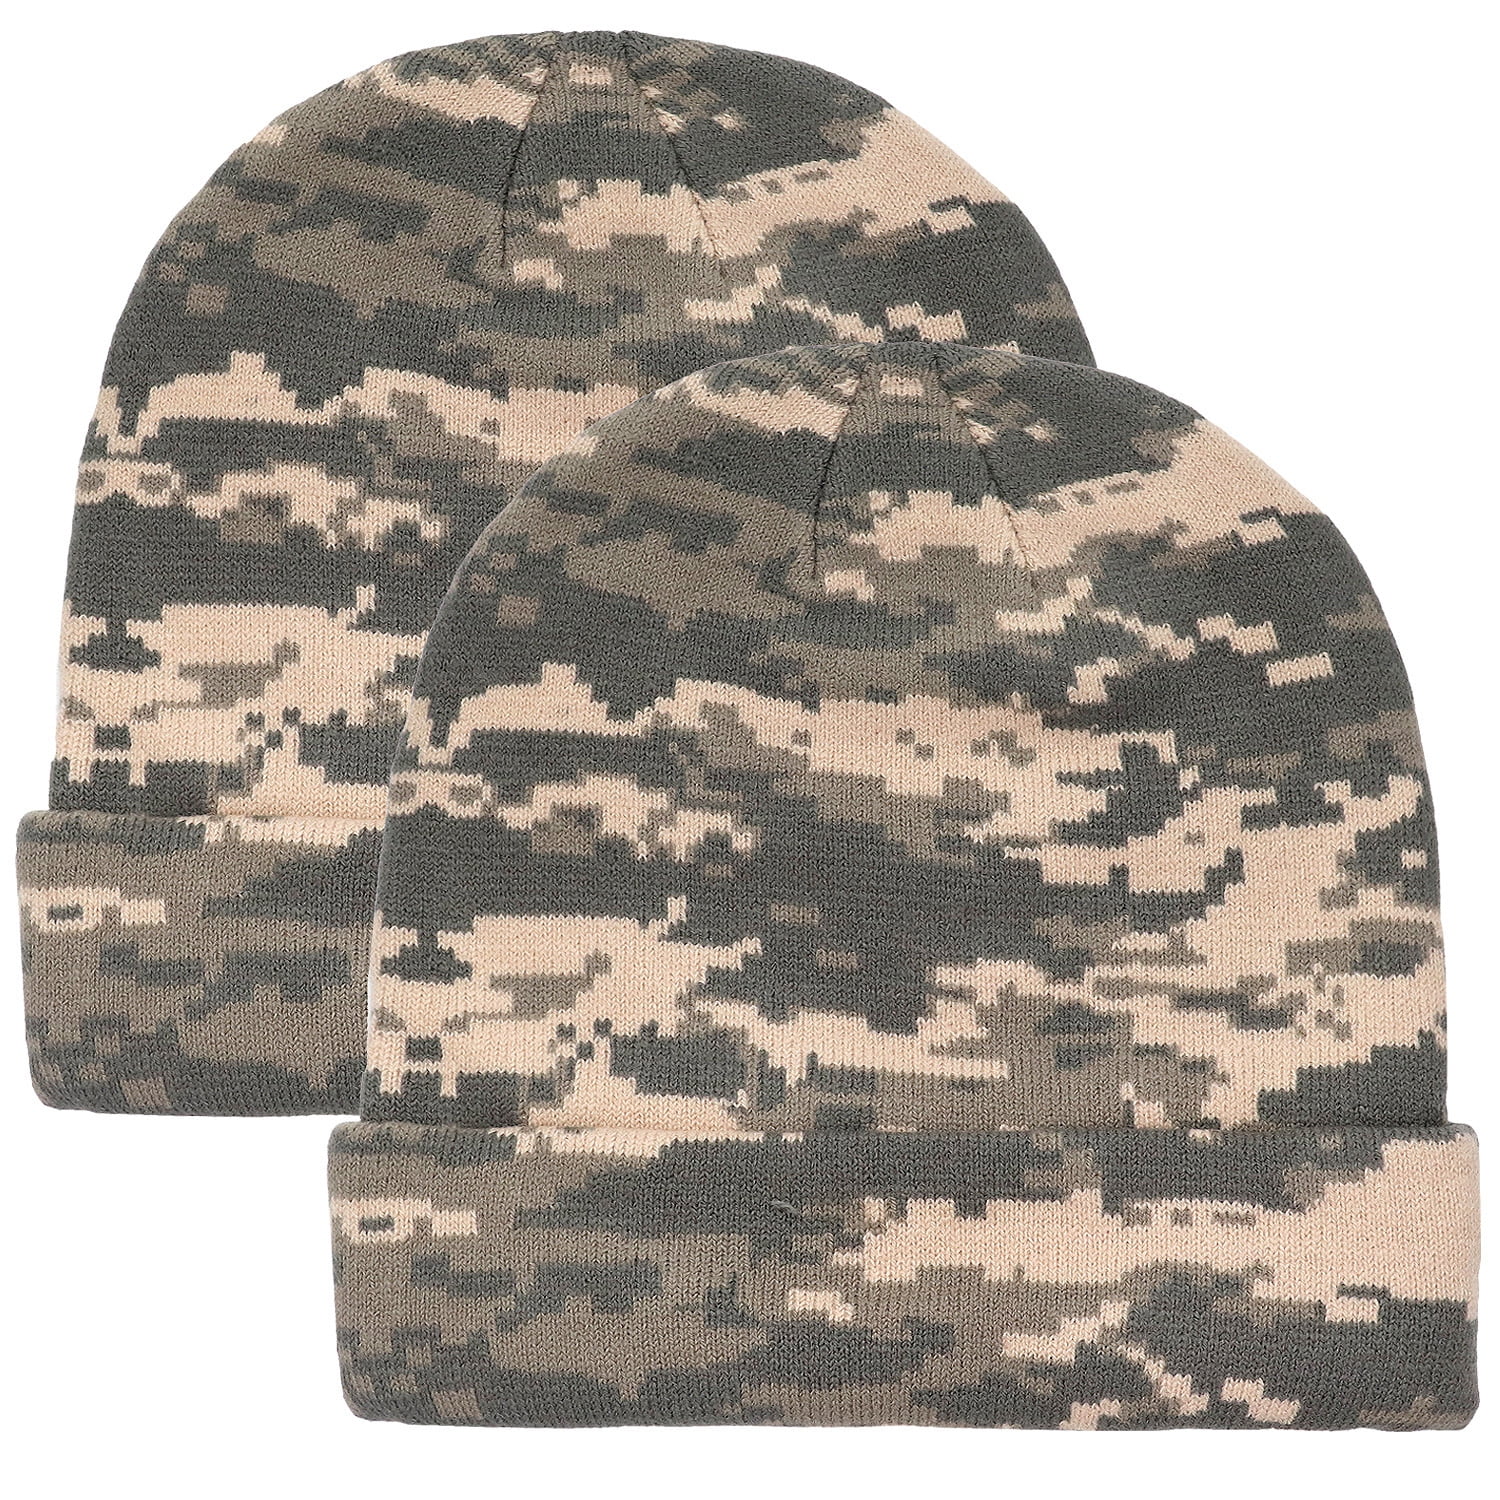 Digital Grey Pixel Camo Camouflage Warm Winter Beanie Beanies Hat Hats Cap Caps 